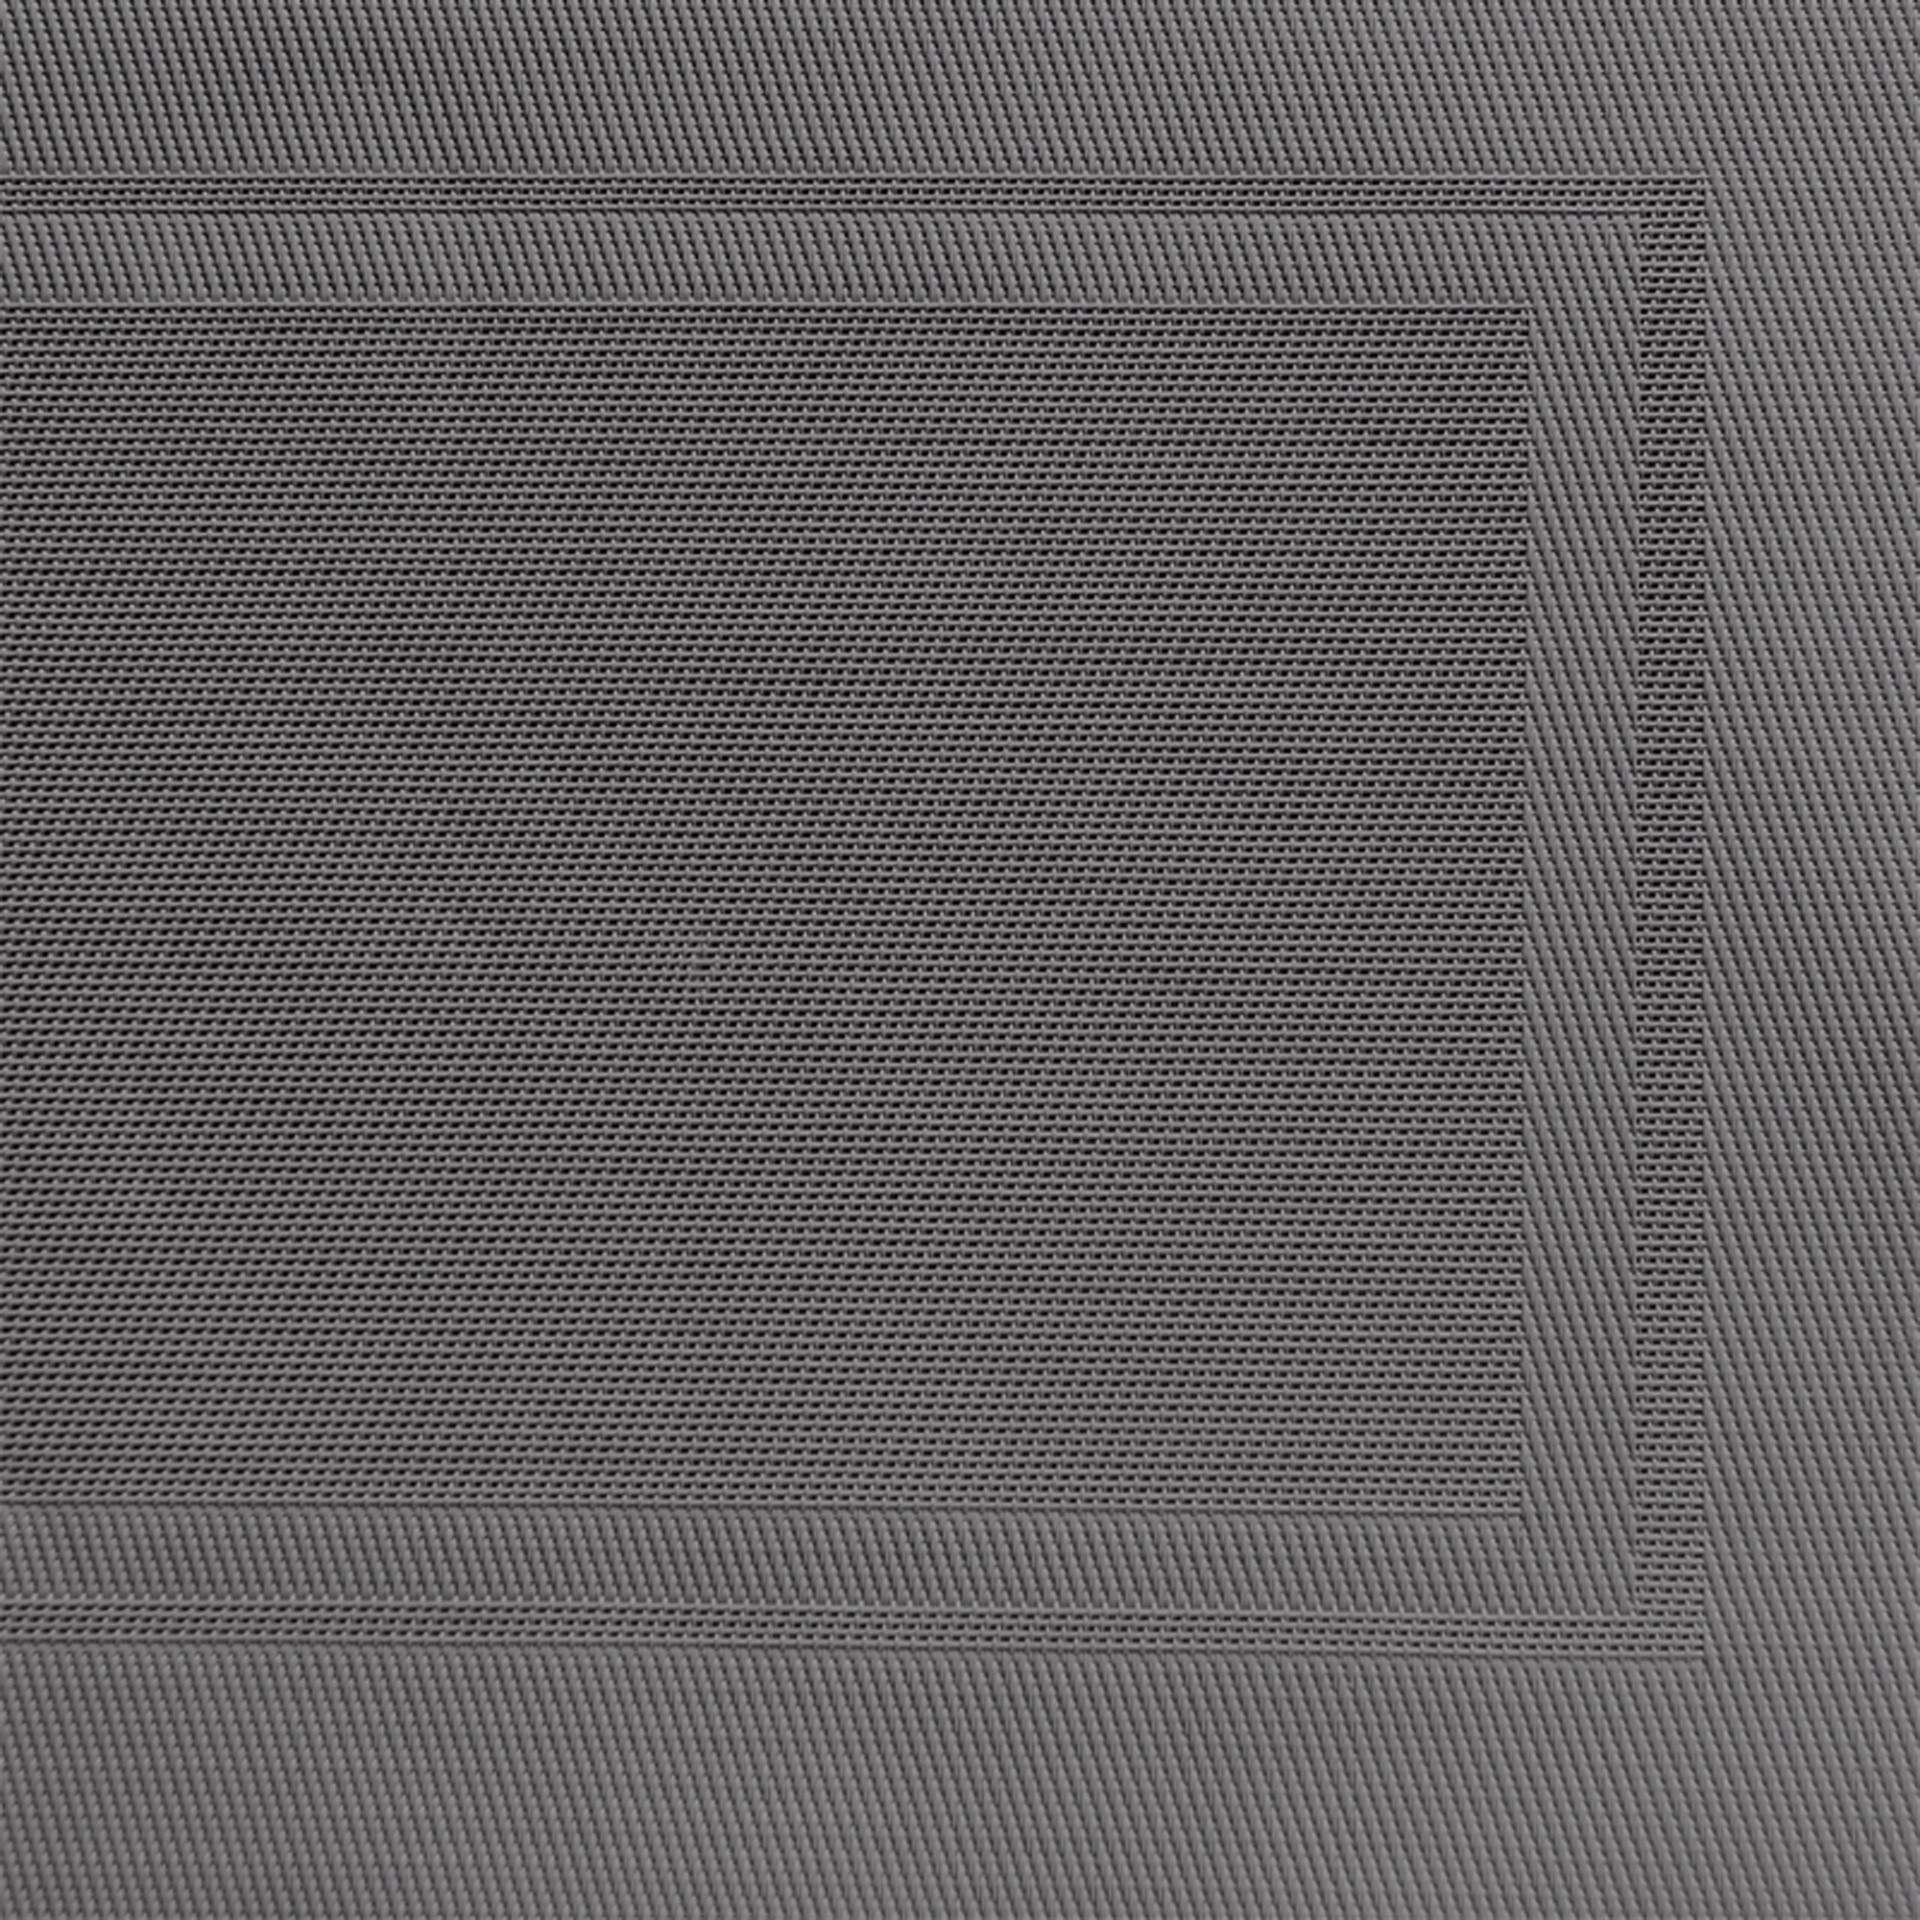 Tischset - Feinband - grau - Abm. 45 x 33 cm - PVC - 60540-B